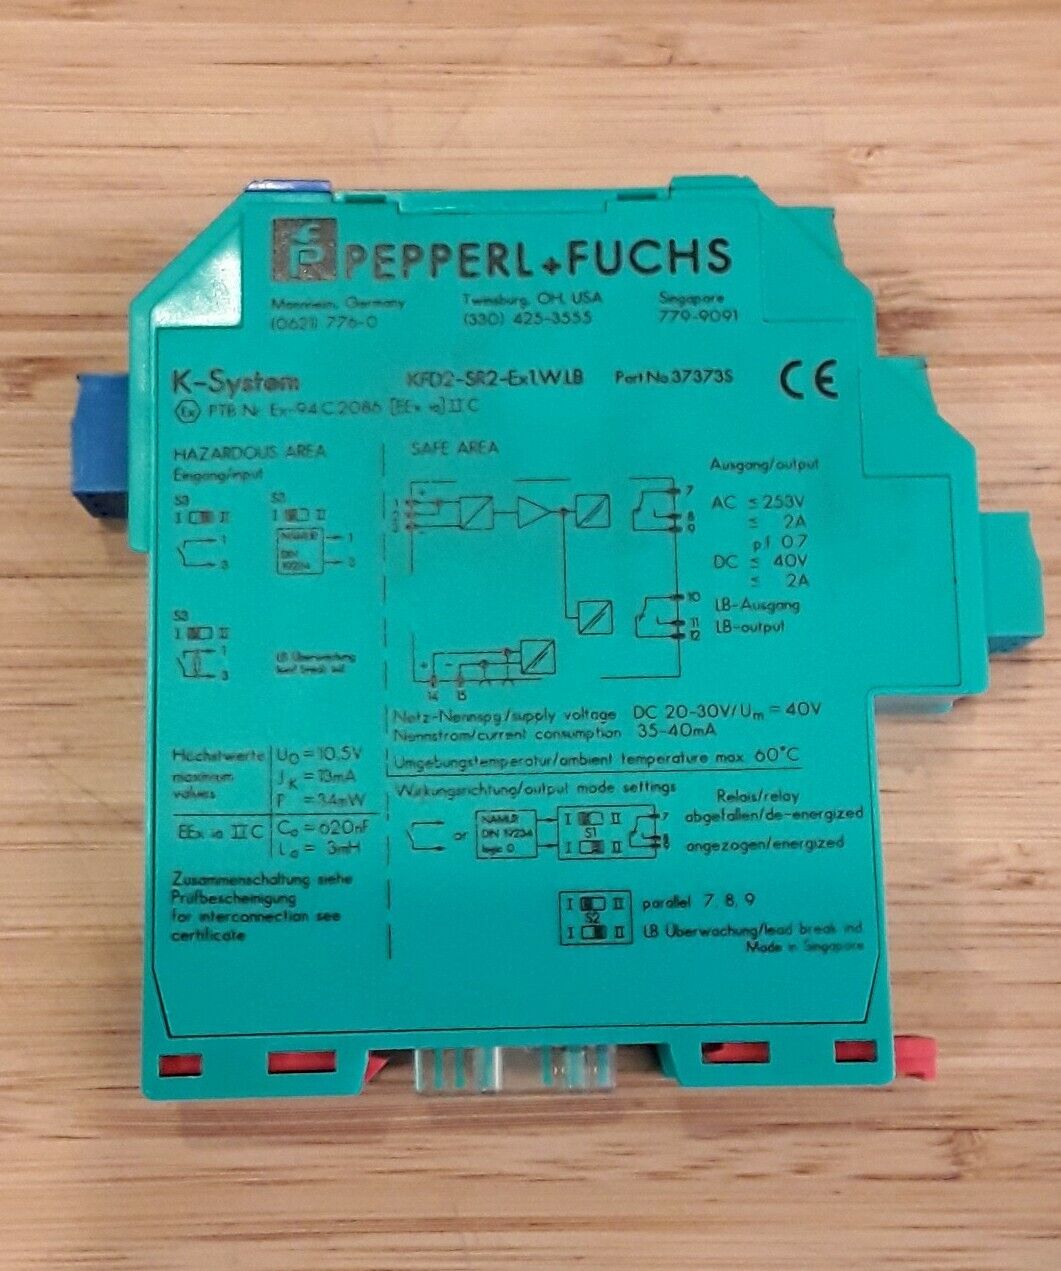 Pepperl Fuchs K-System KFD2-SR2-Ex1.W.LB Switch Amplifier (GR107)